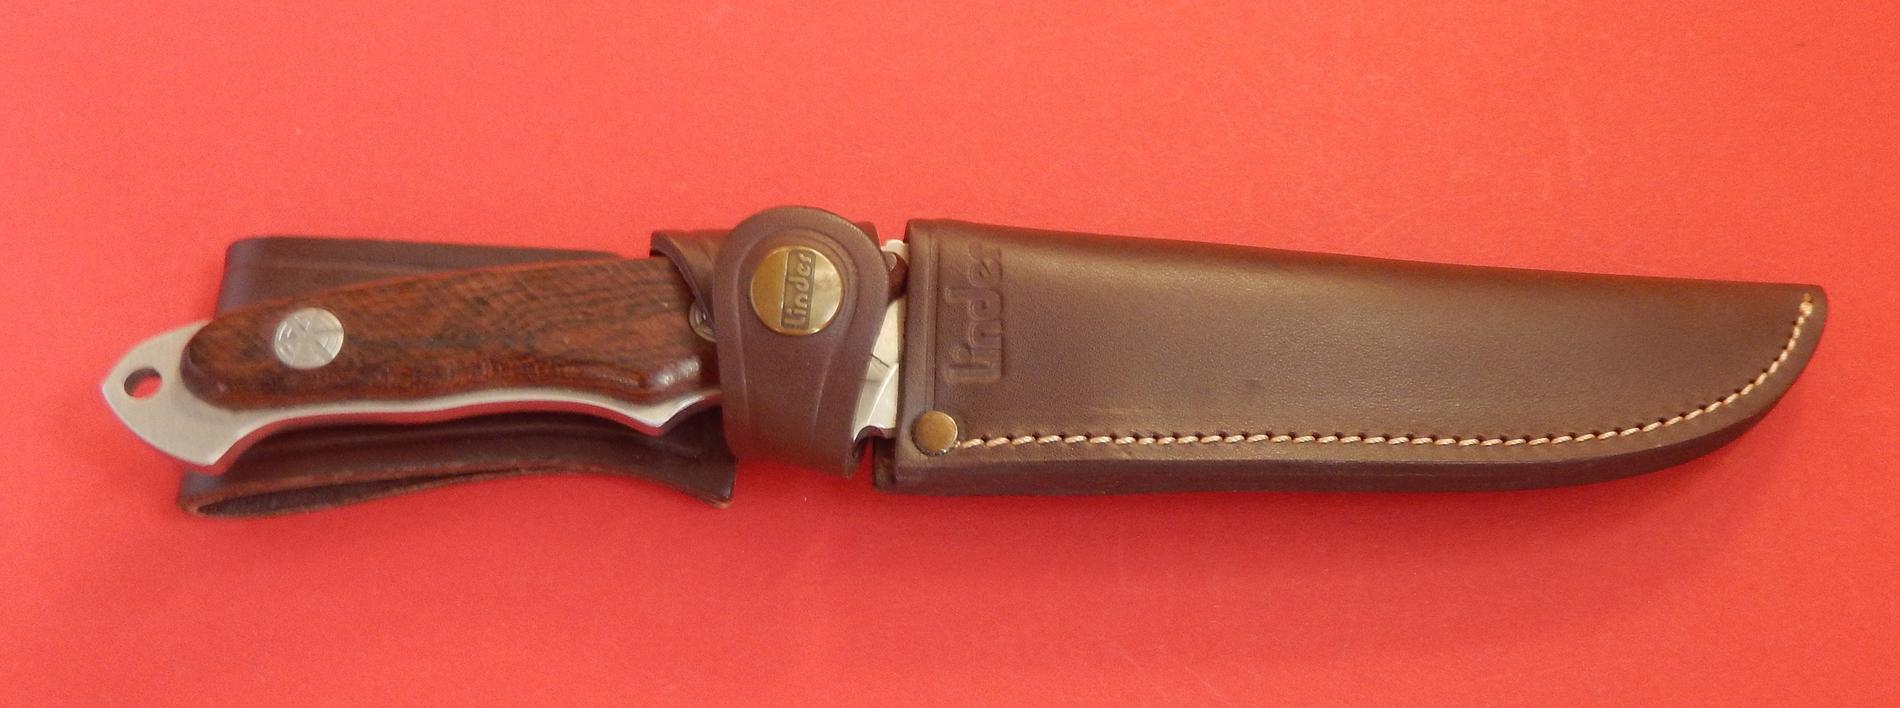 Outdoor -Gürtelmesser 15 cm Quality Made in SG bei ISS